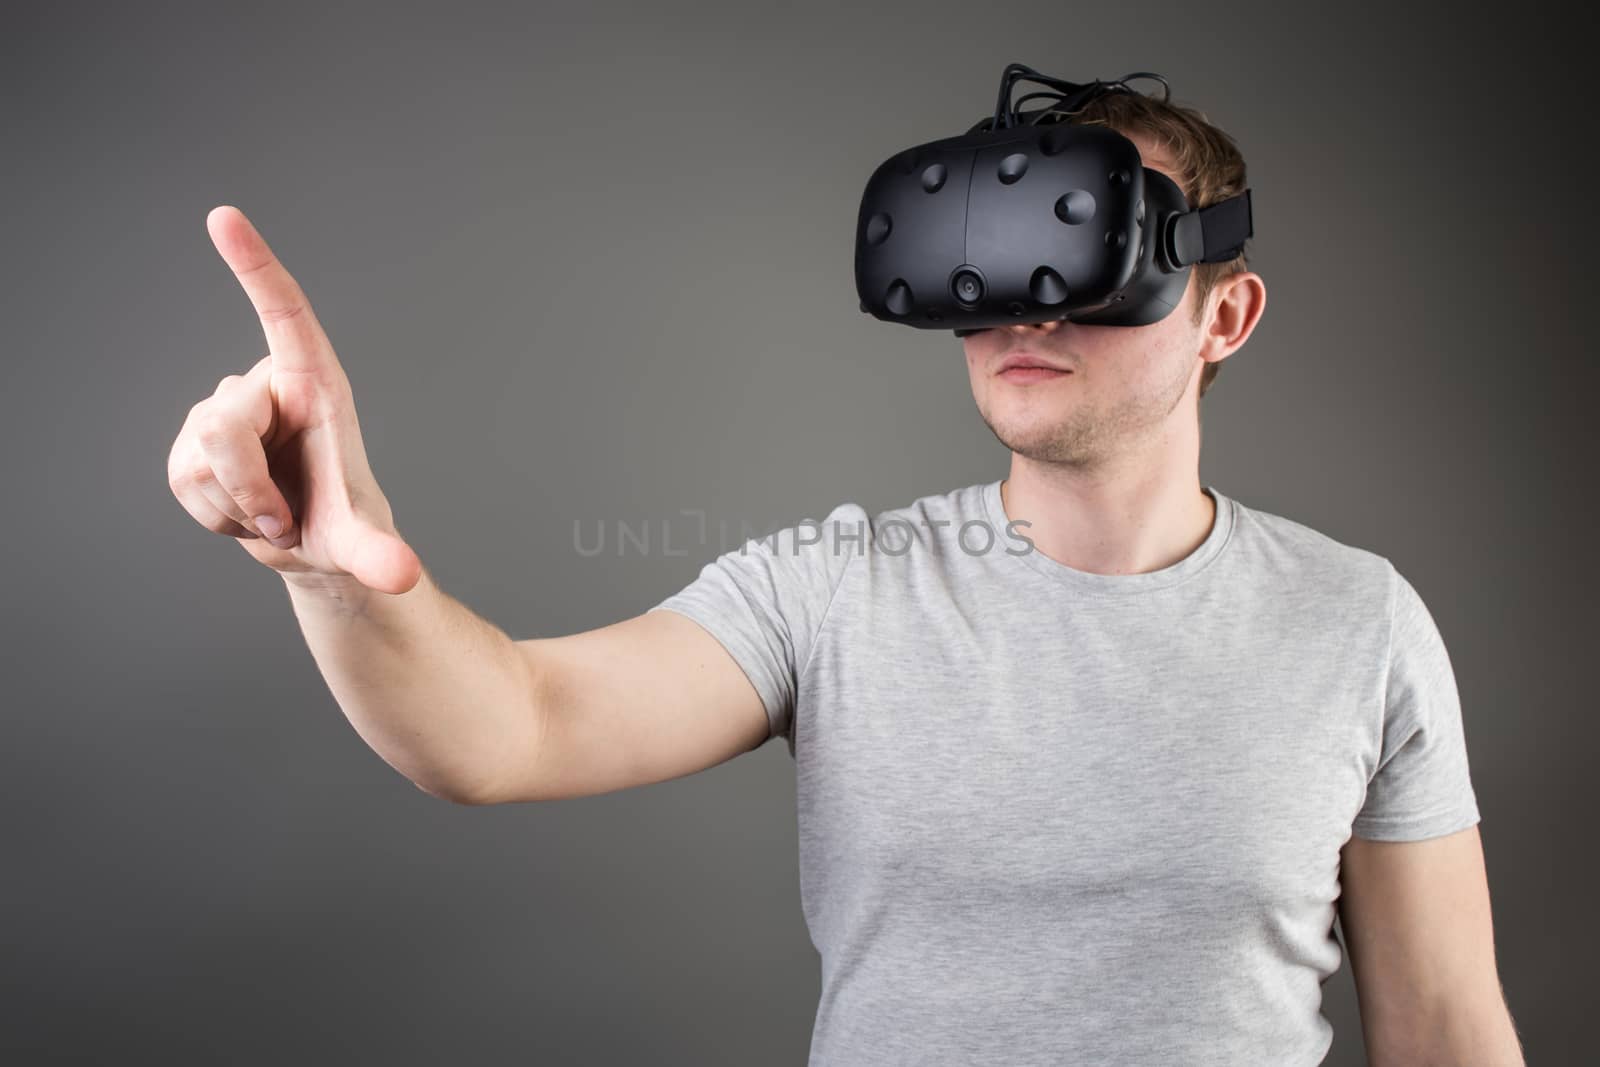 Male business executive using virtual reality headset